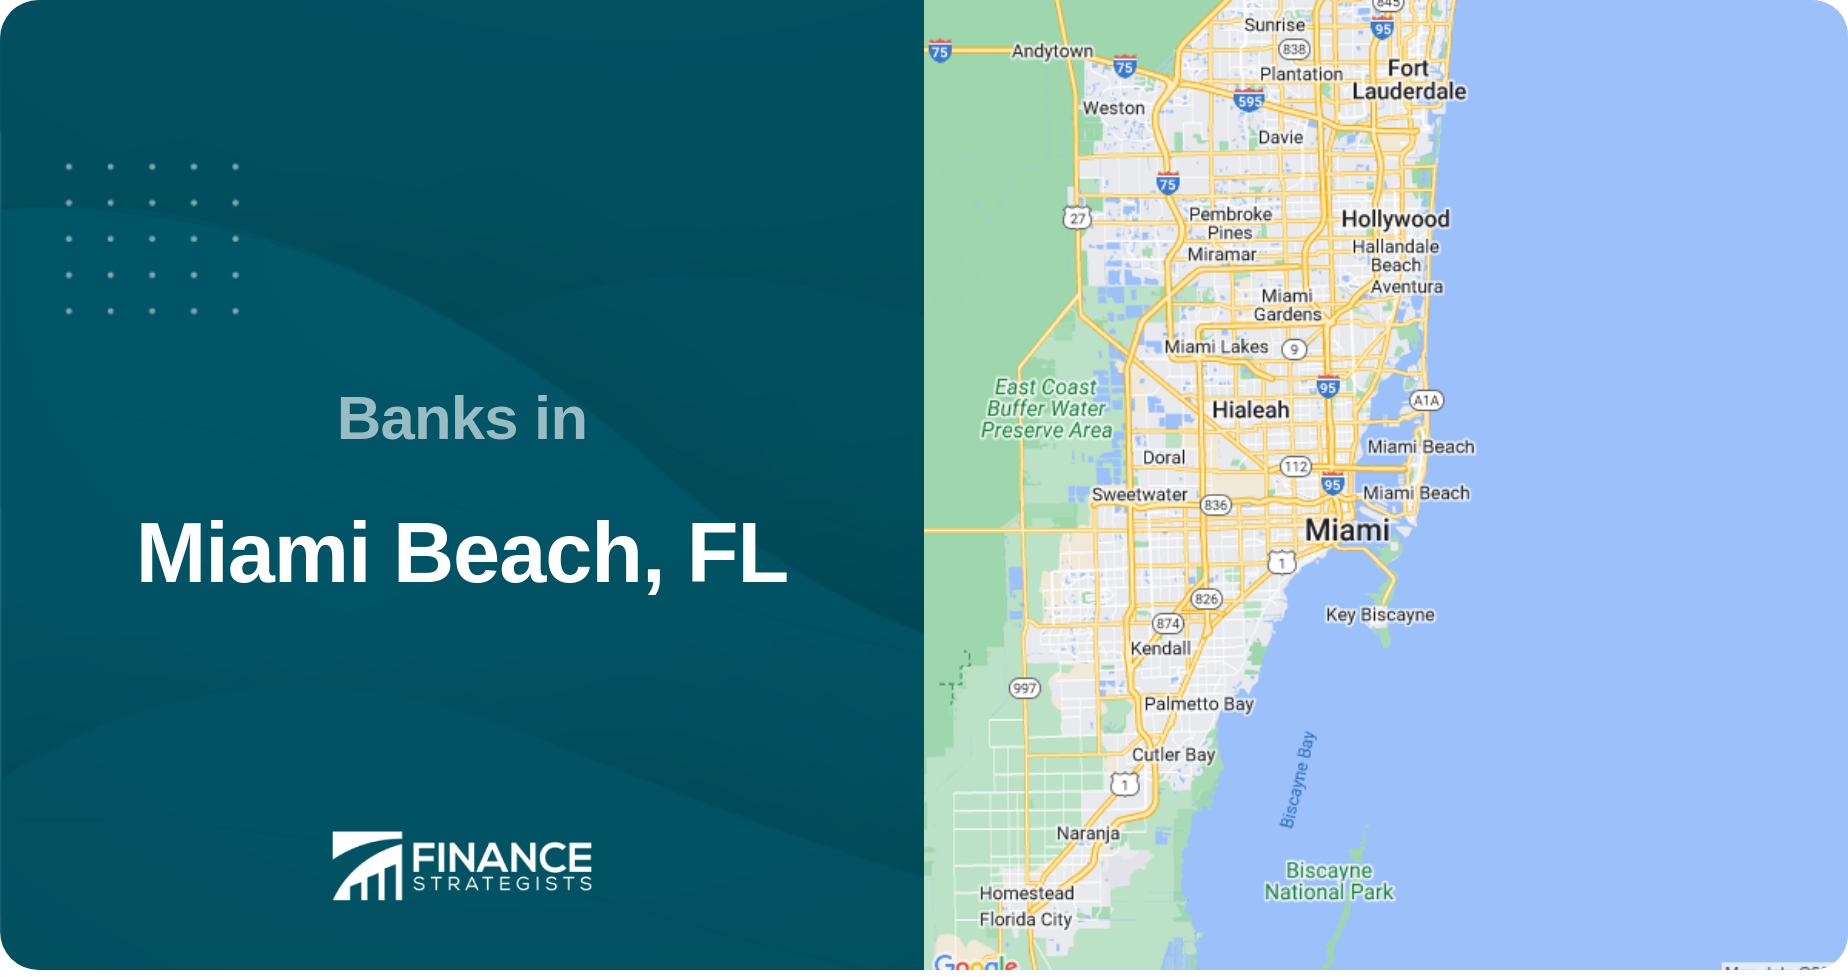 Banks in Miami Beach, FL